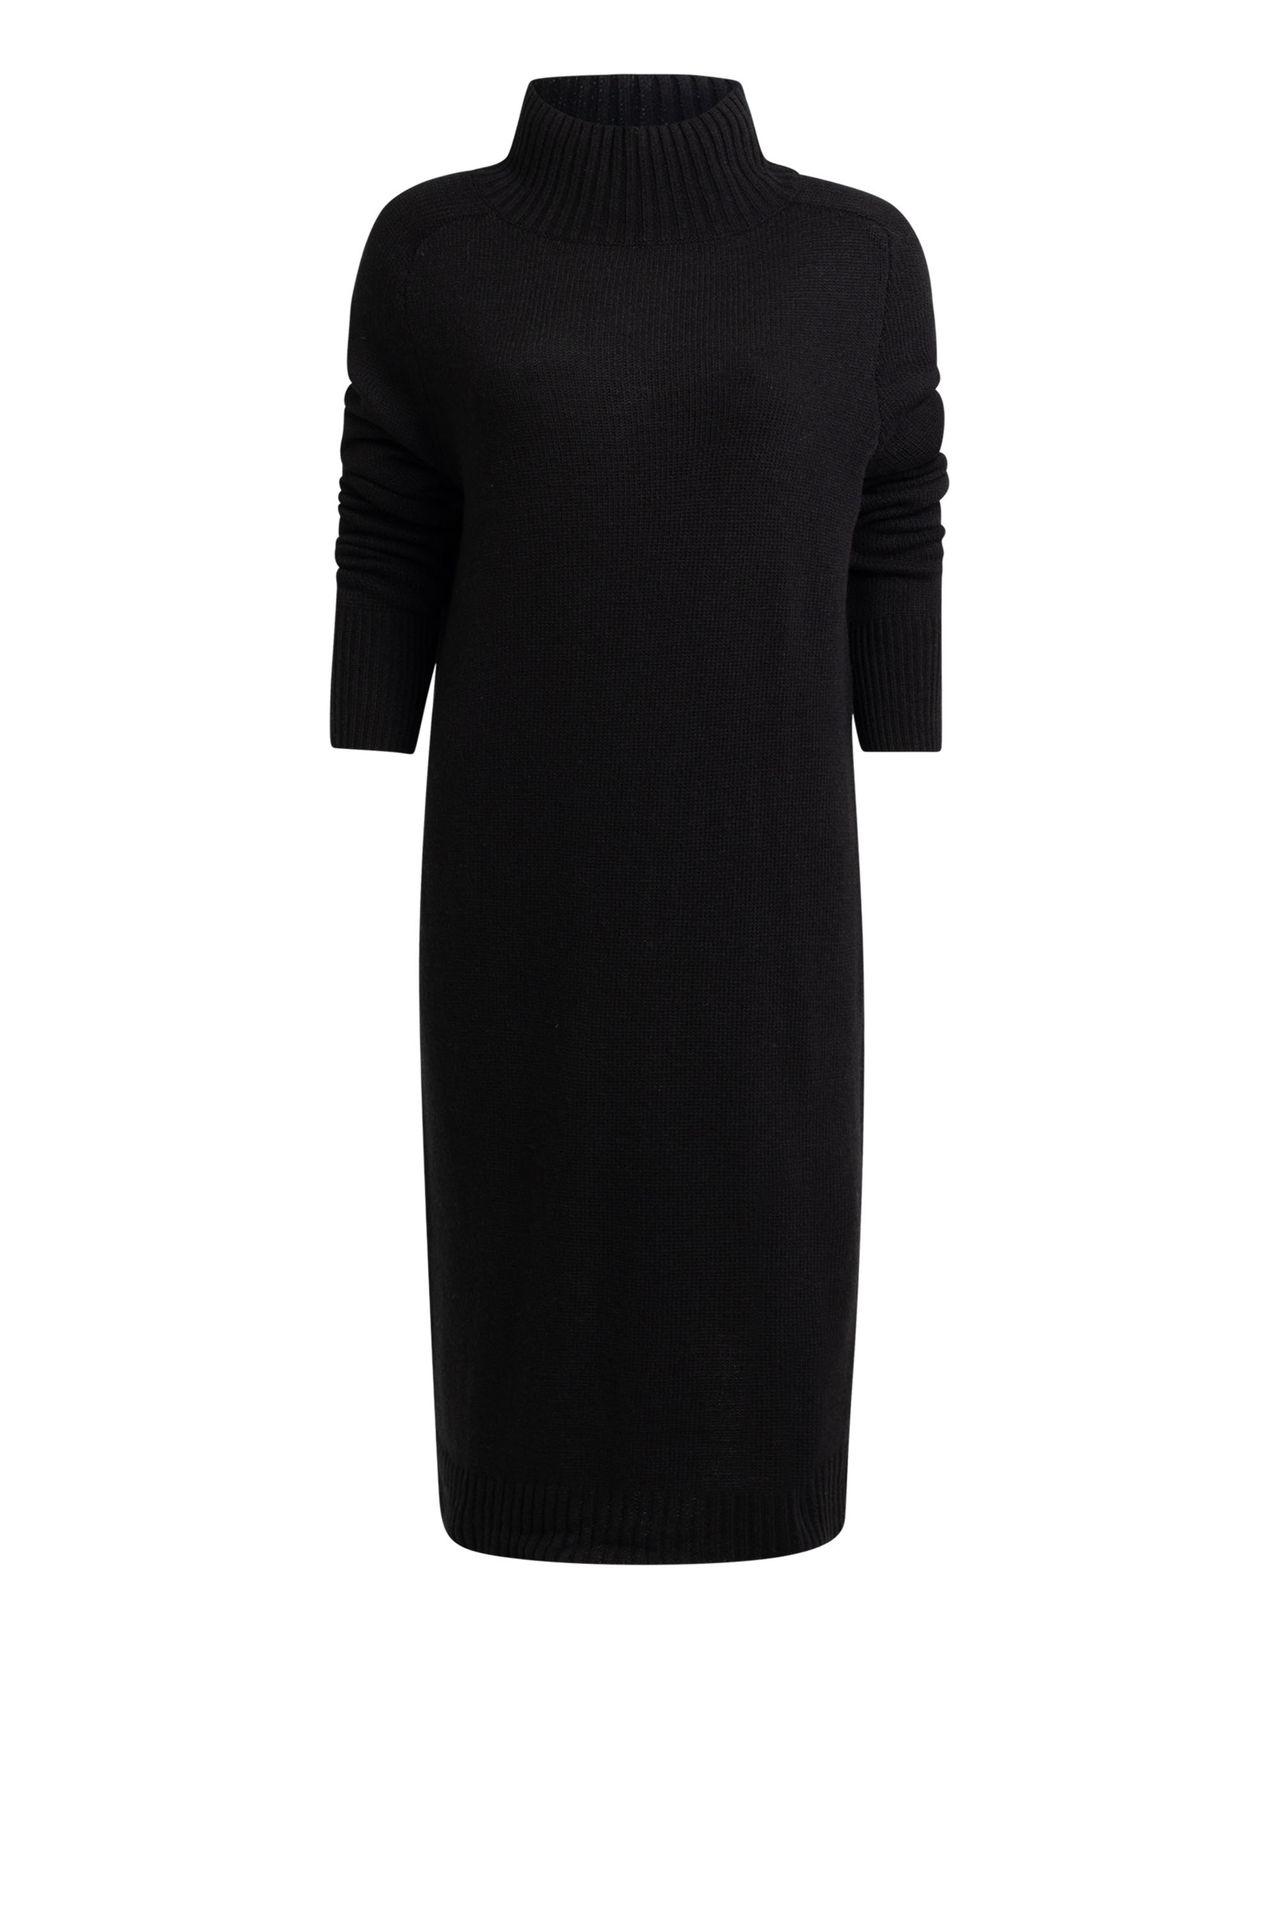  Gebreide jurk zwart black 210622-001-48